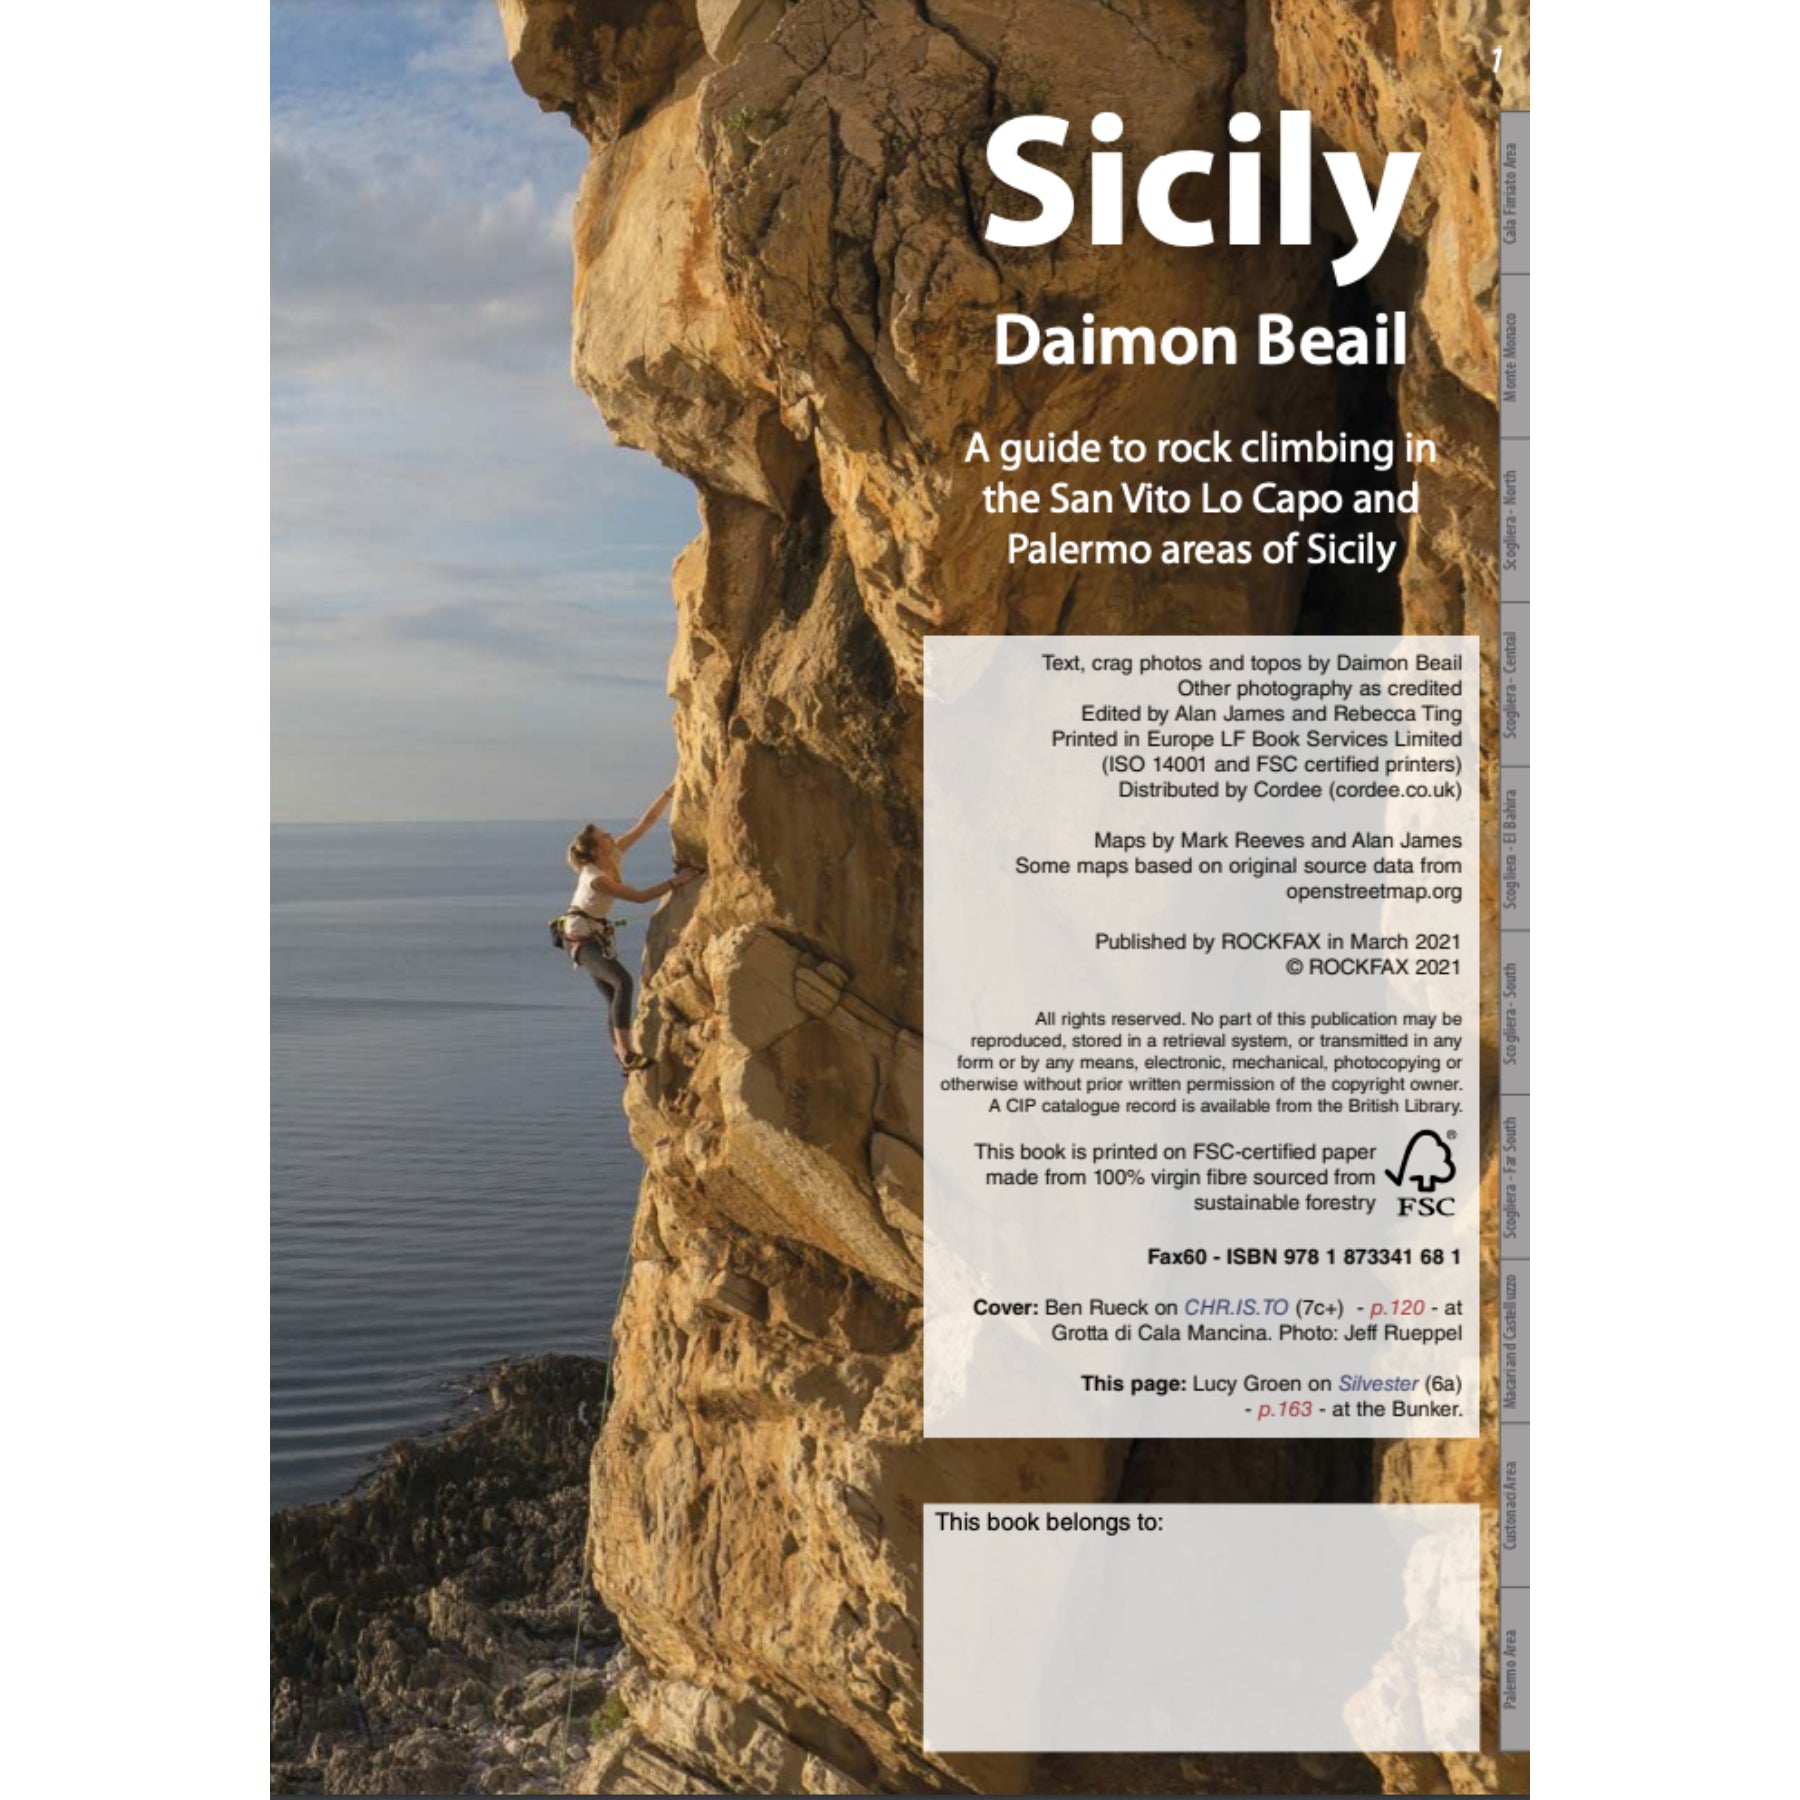 Sicily (Rockfax) guide book front cover